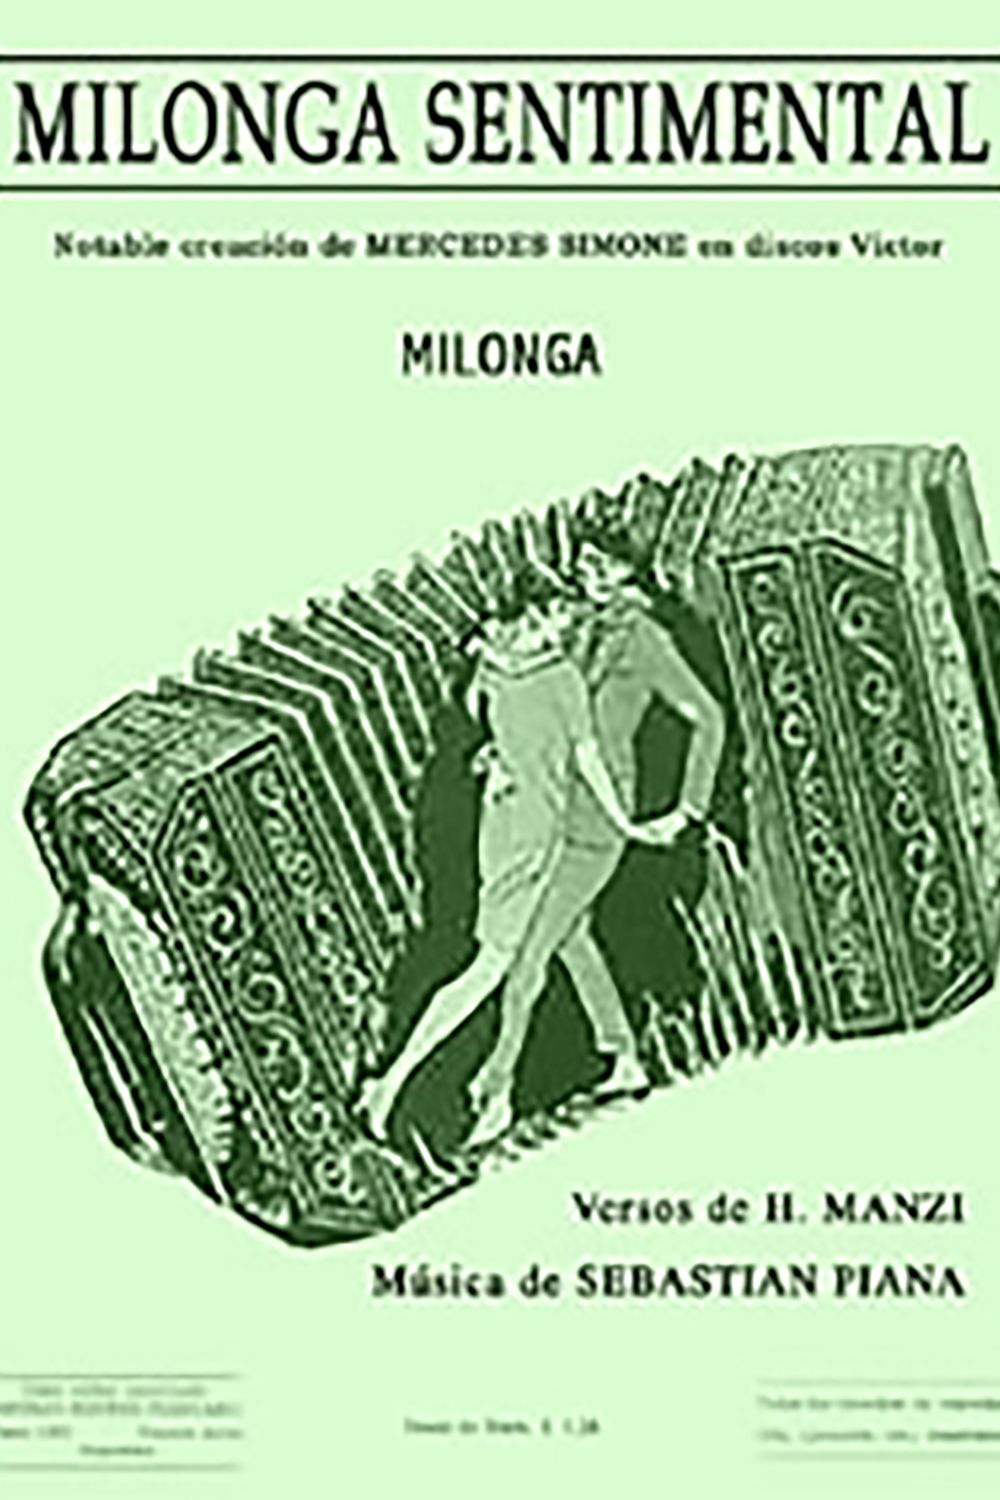 "Milonga sentimental", tapa de la partitura musical del tema de Tango.